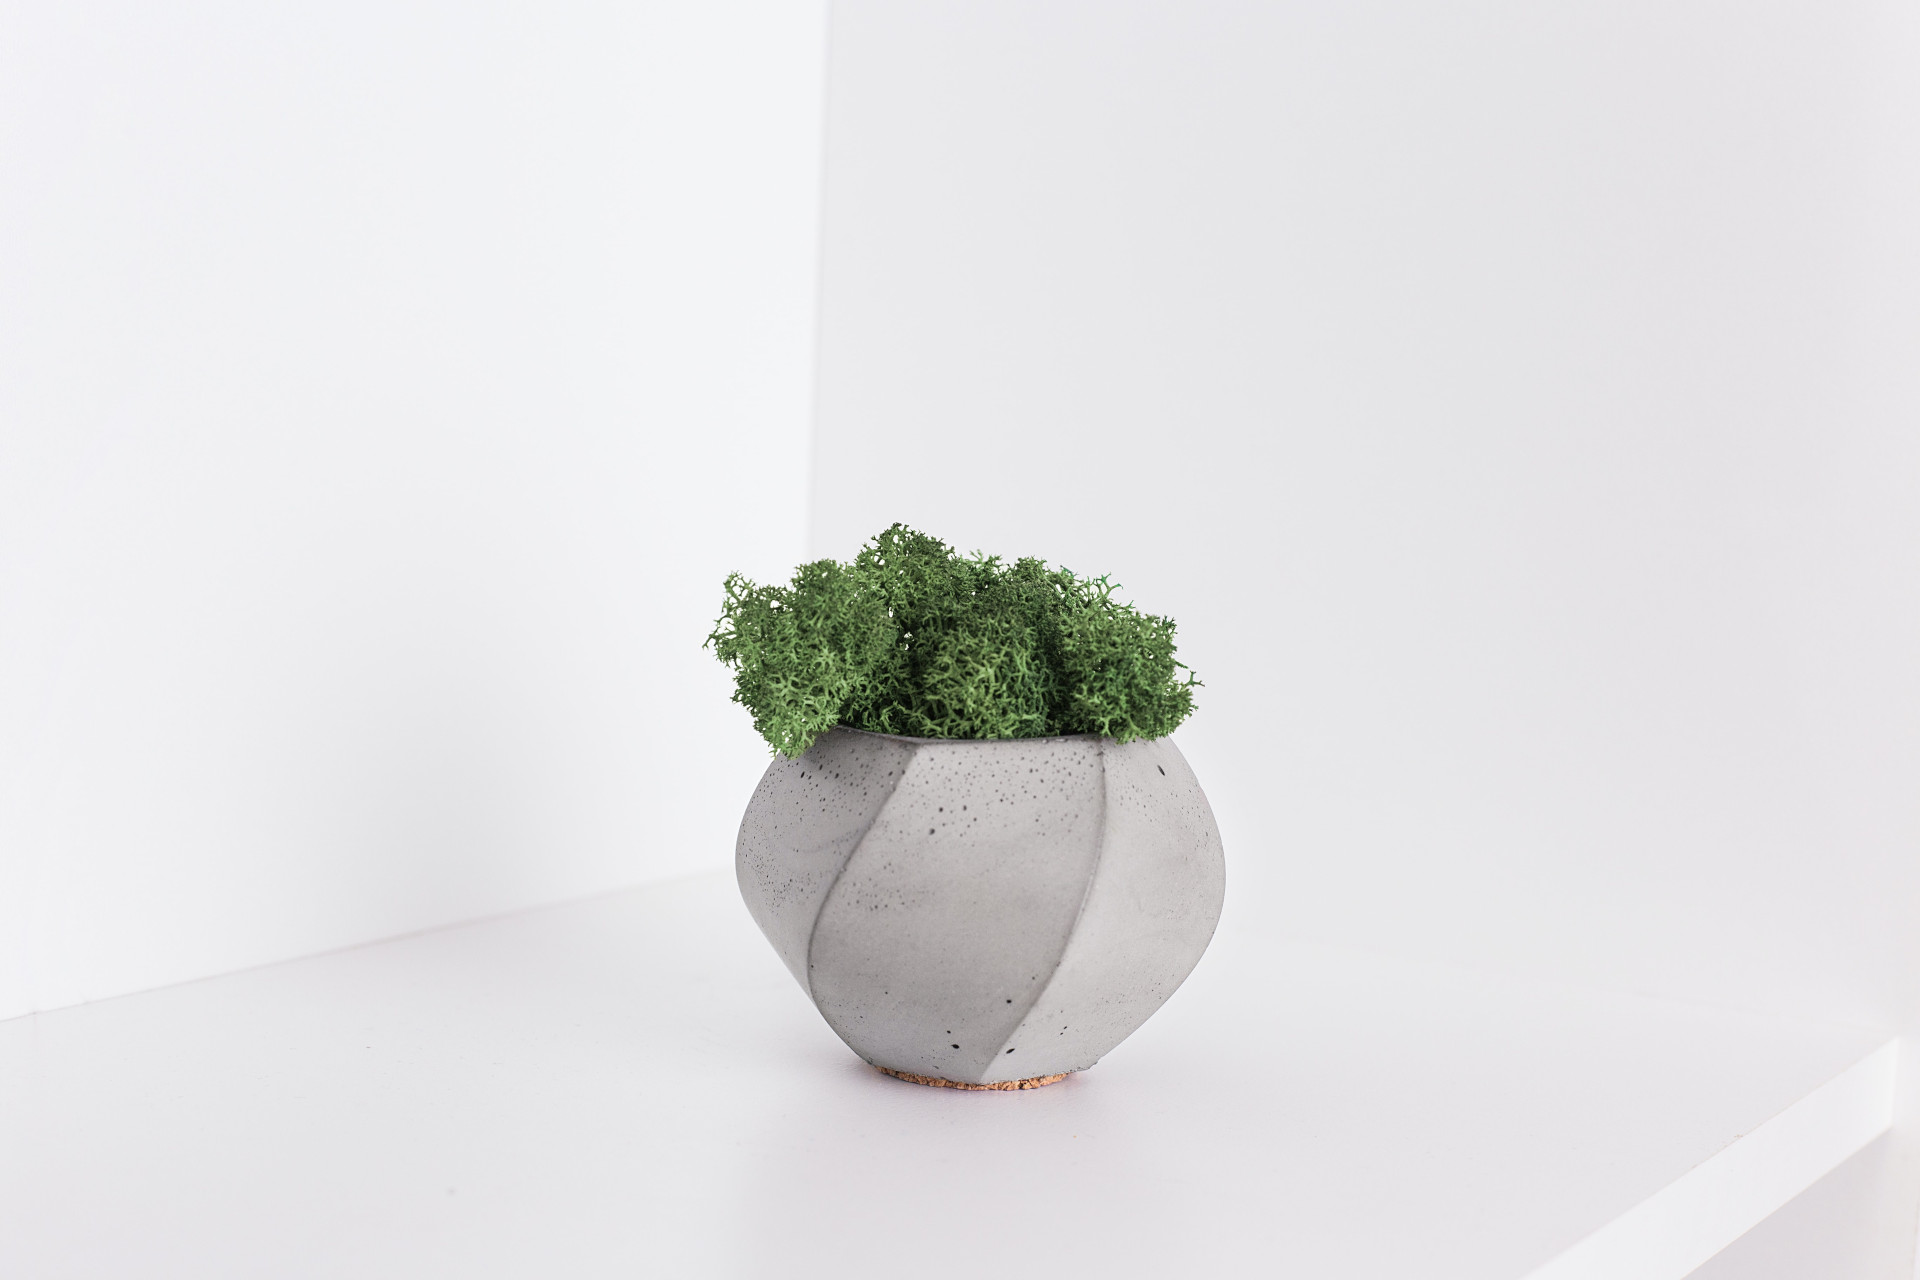 A minimalistic photo with a concrete vase